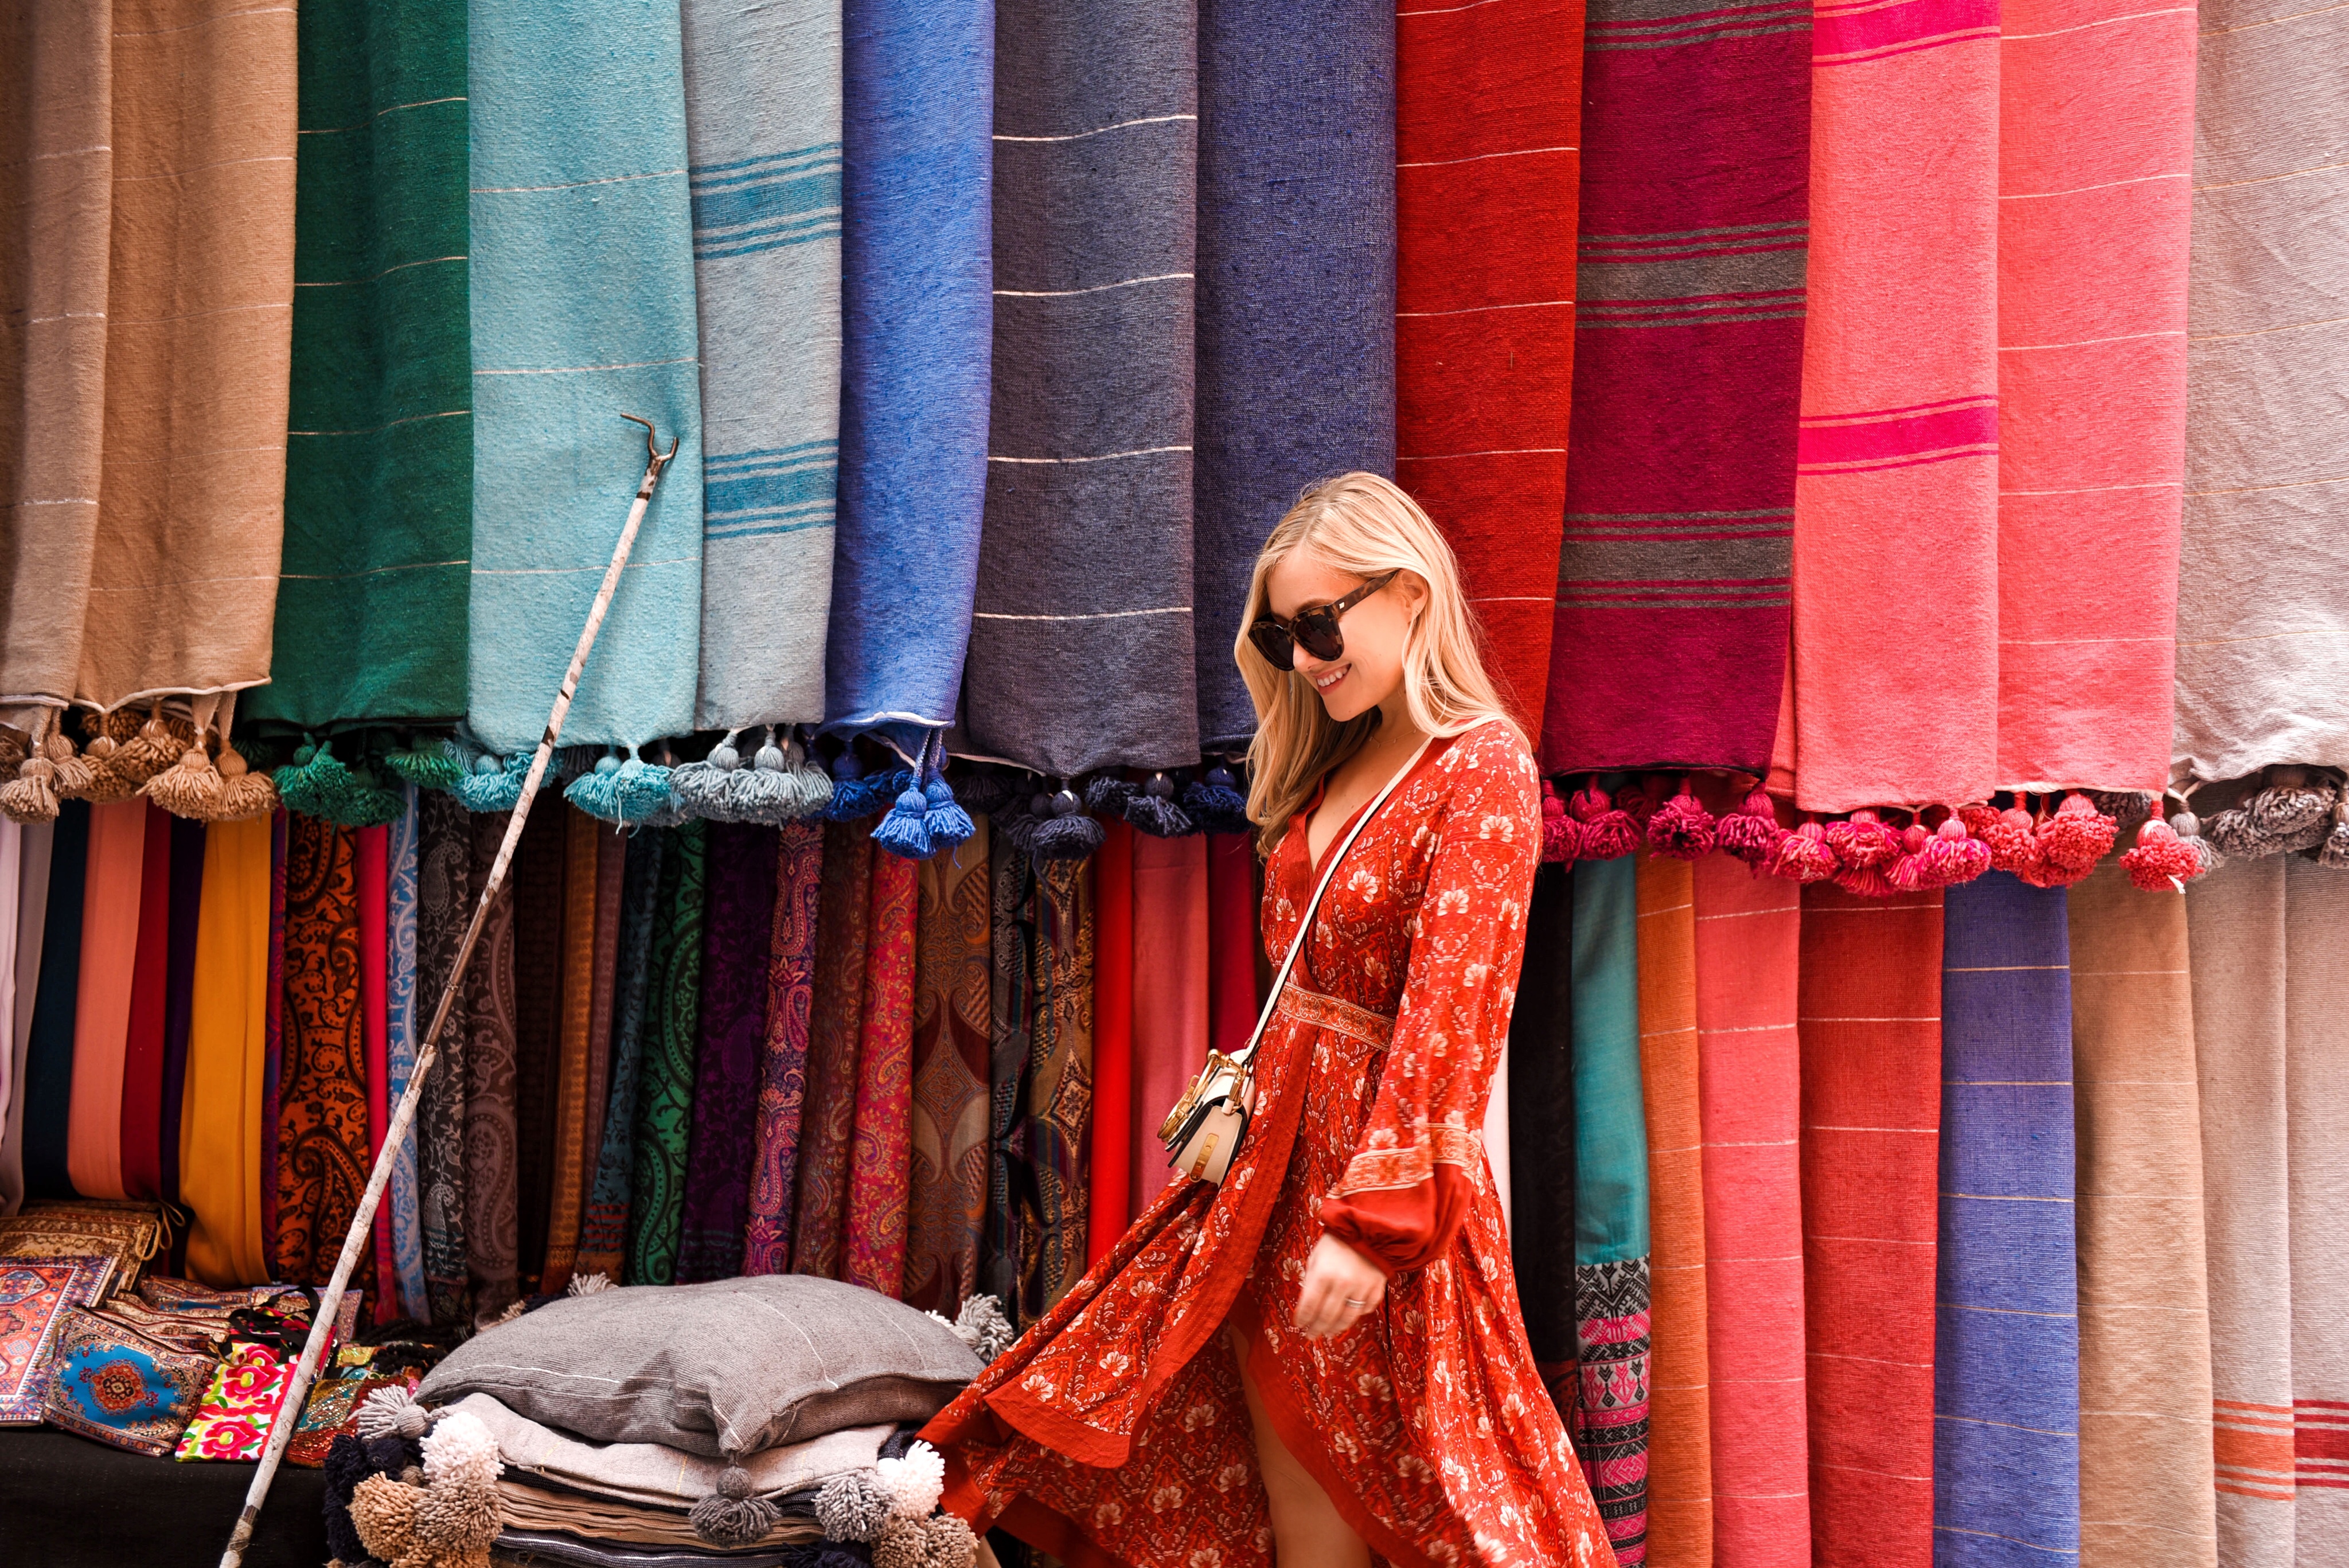 Lo-Murphy-Red-Dress-Marrakech-Souks-Spell-Byron- Bay-Travel-Style-Revolve-Dress